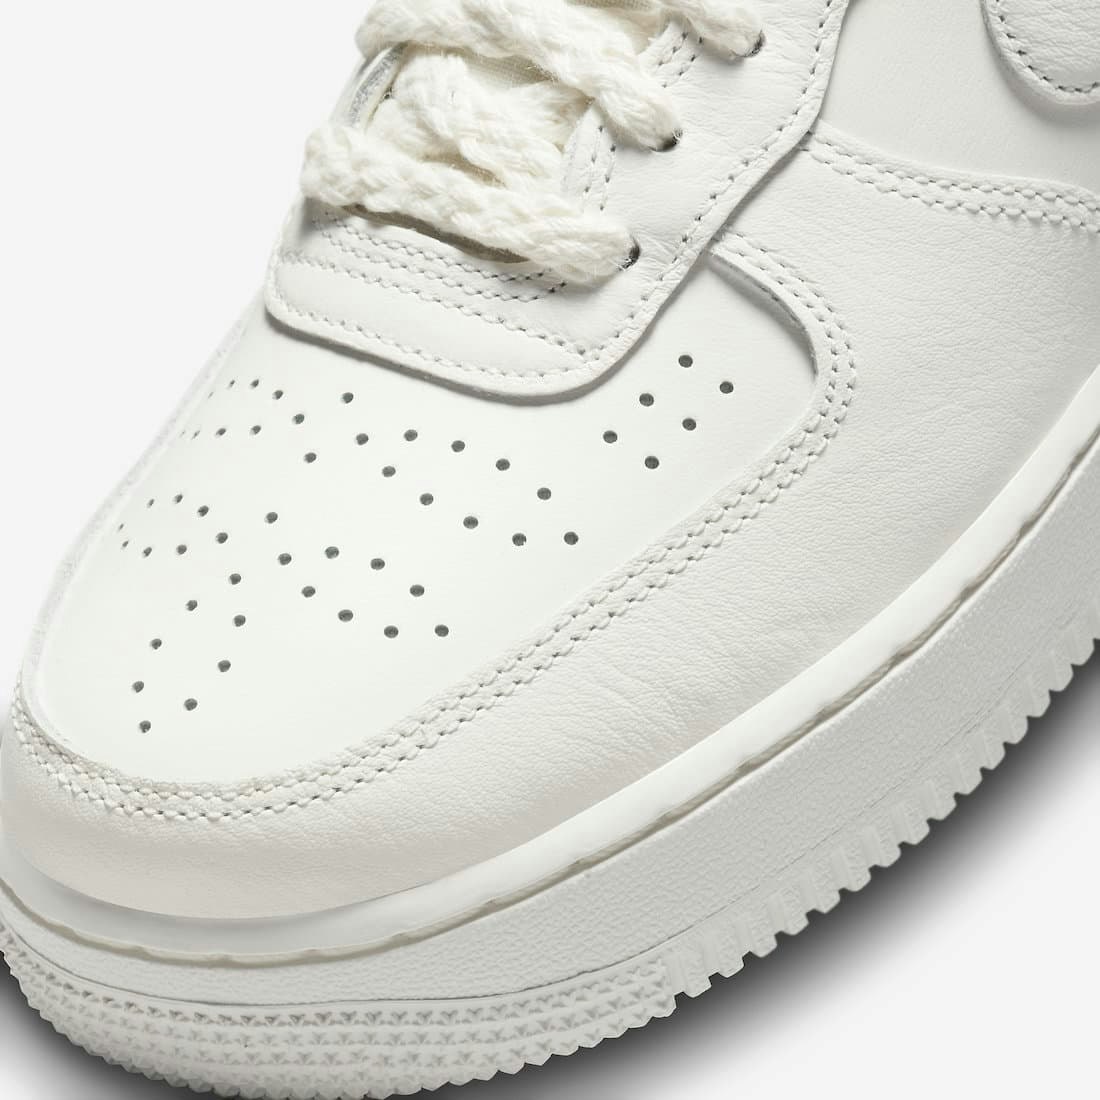 Nike Air Force 1 Low "Chrome Tabs" (White)